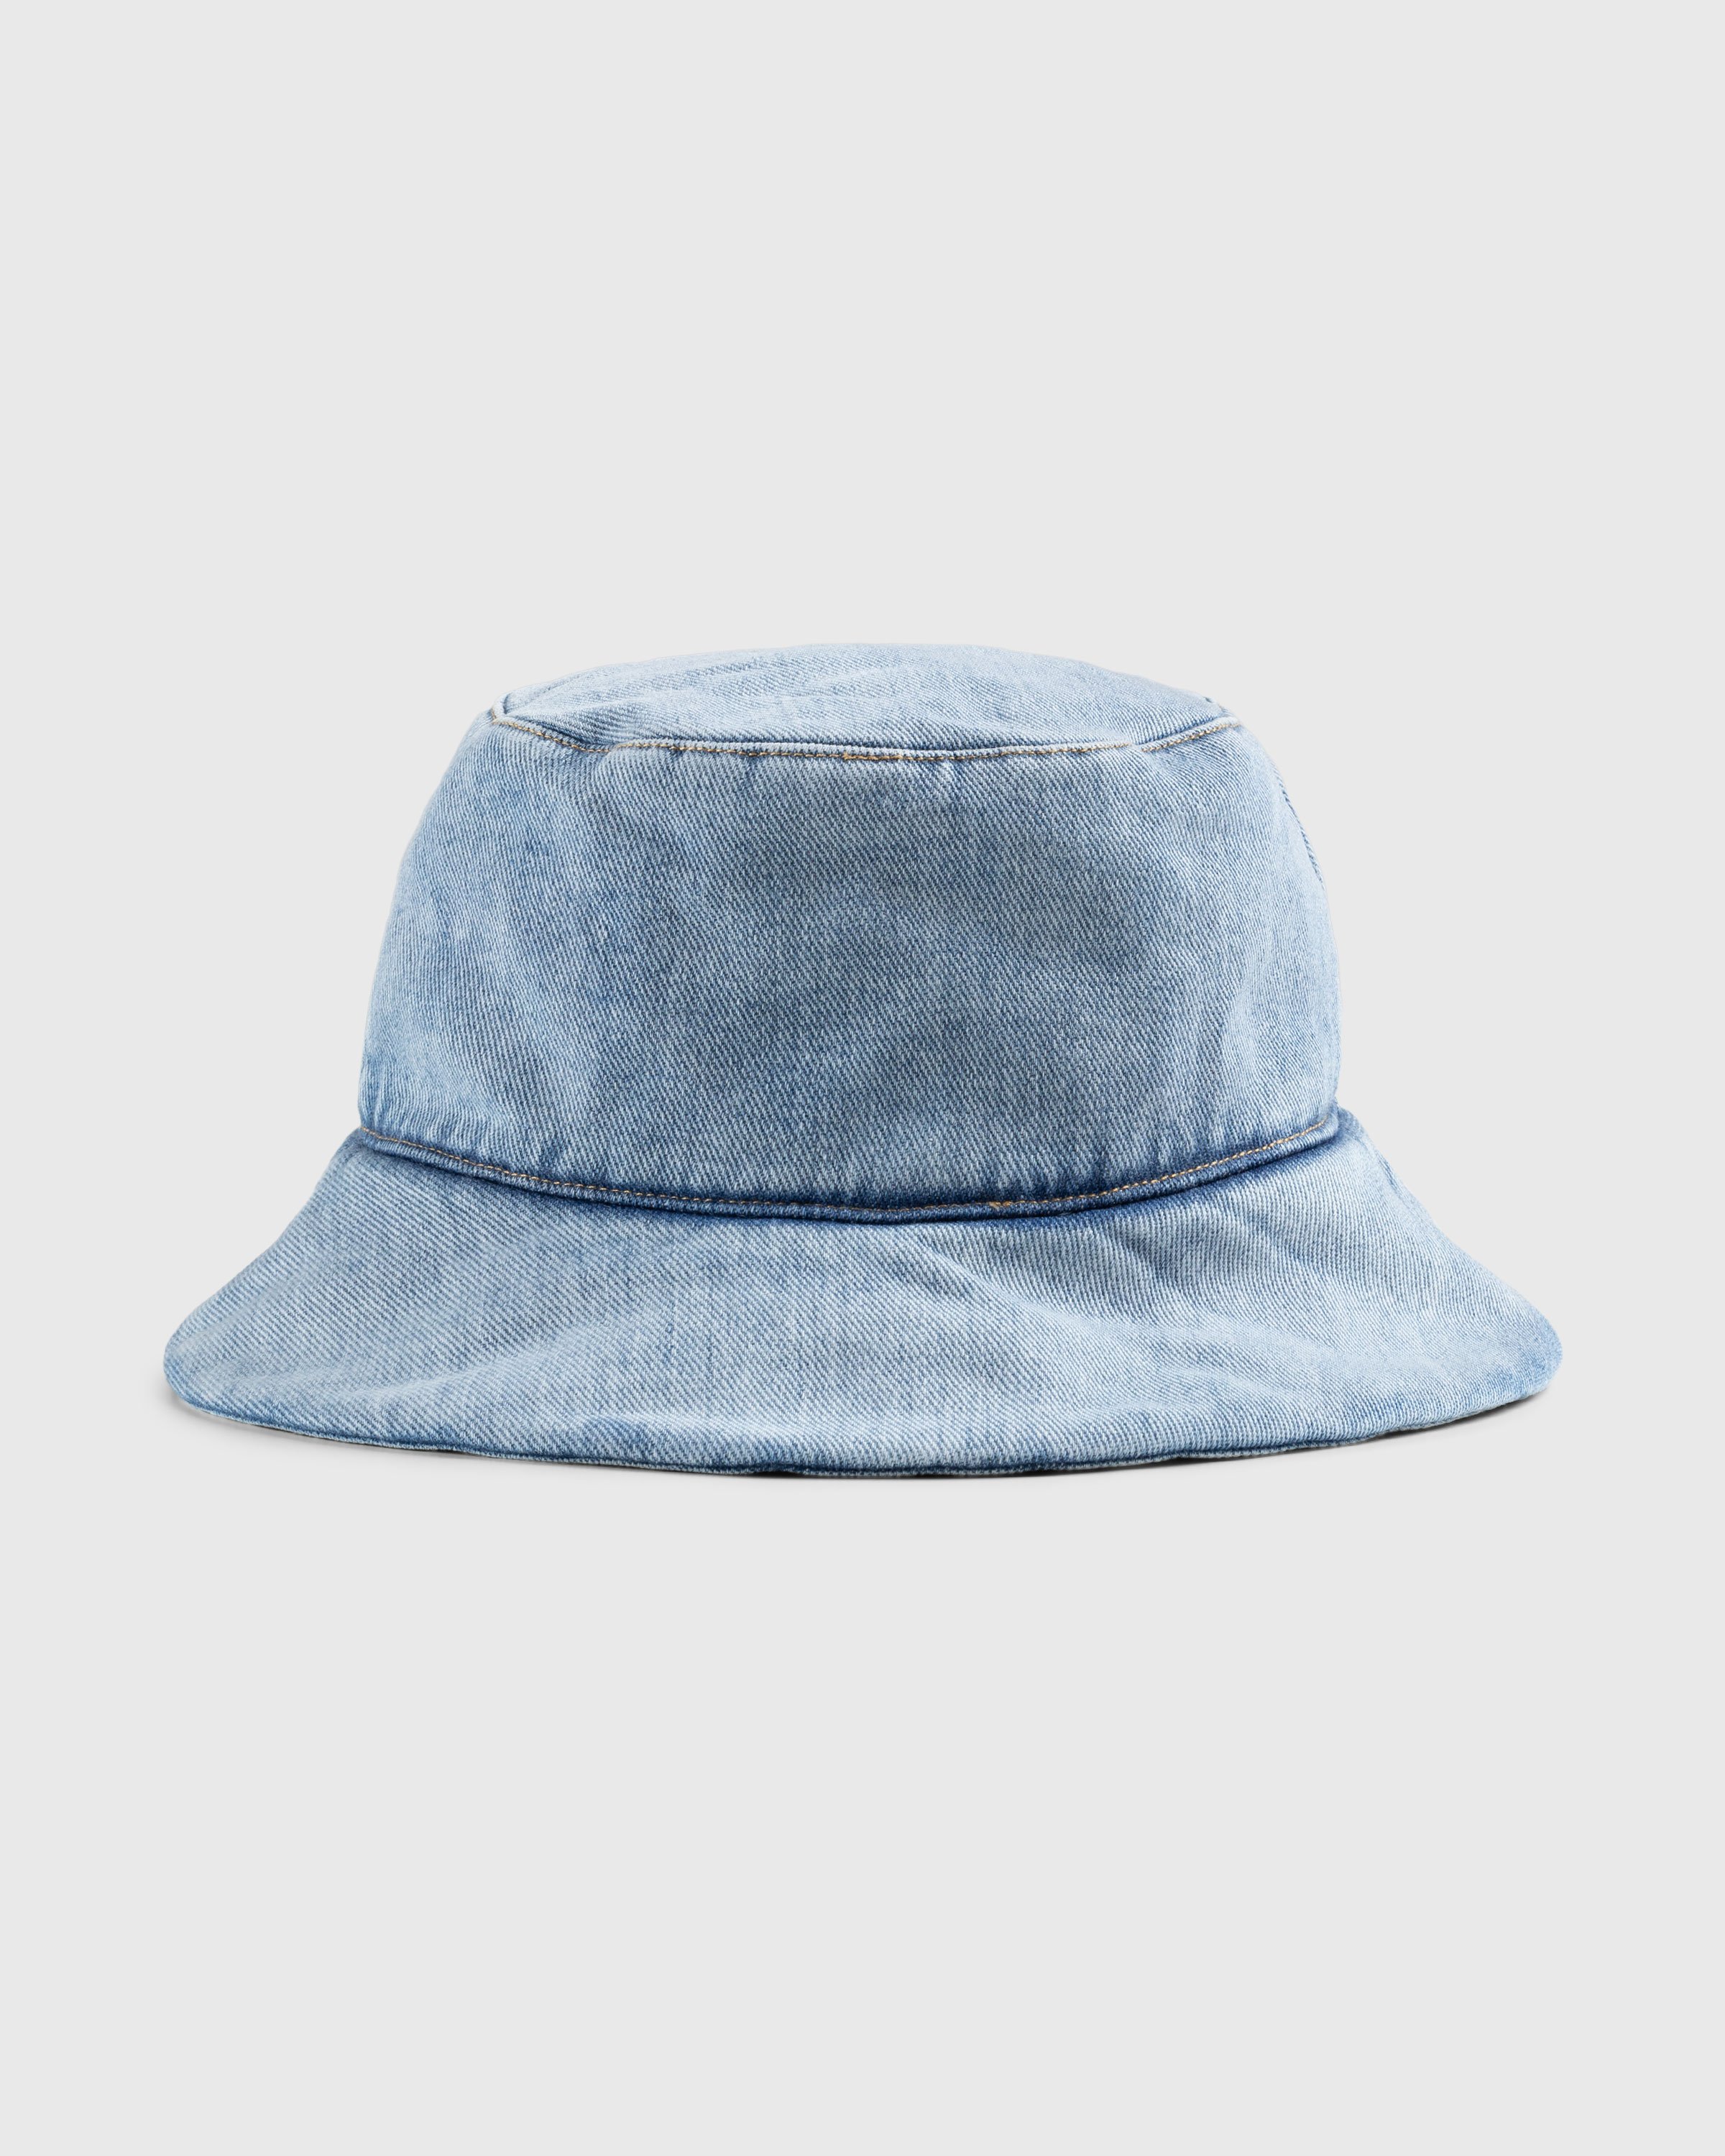 Acne Studios – Padded Denim Bucket Hat Blue | Highsnobiety Shop